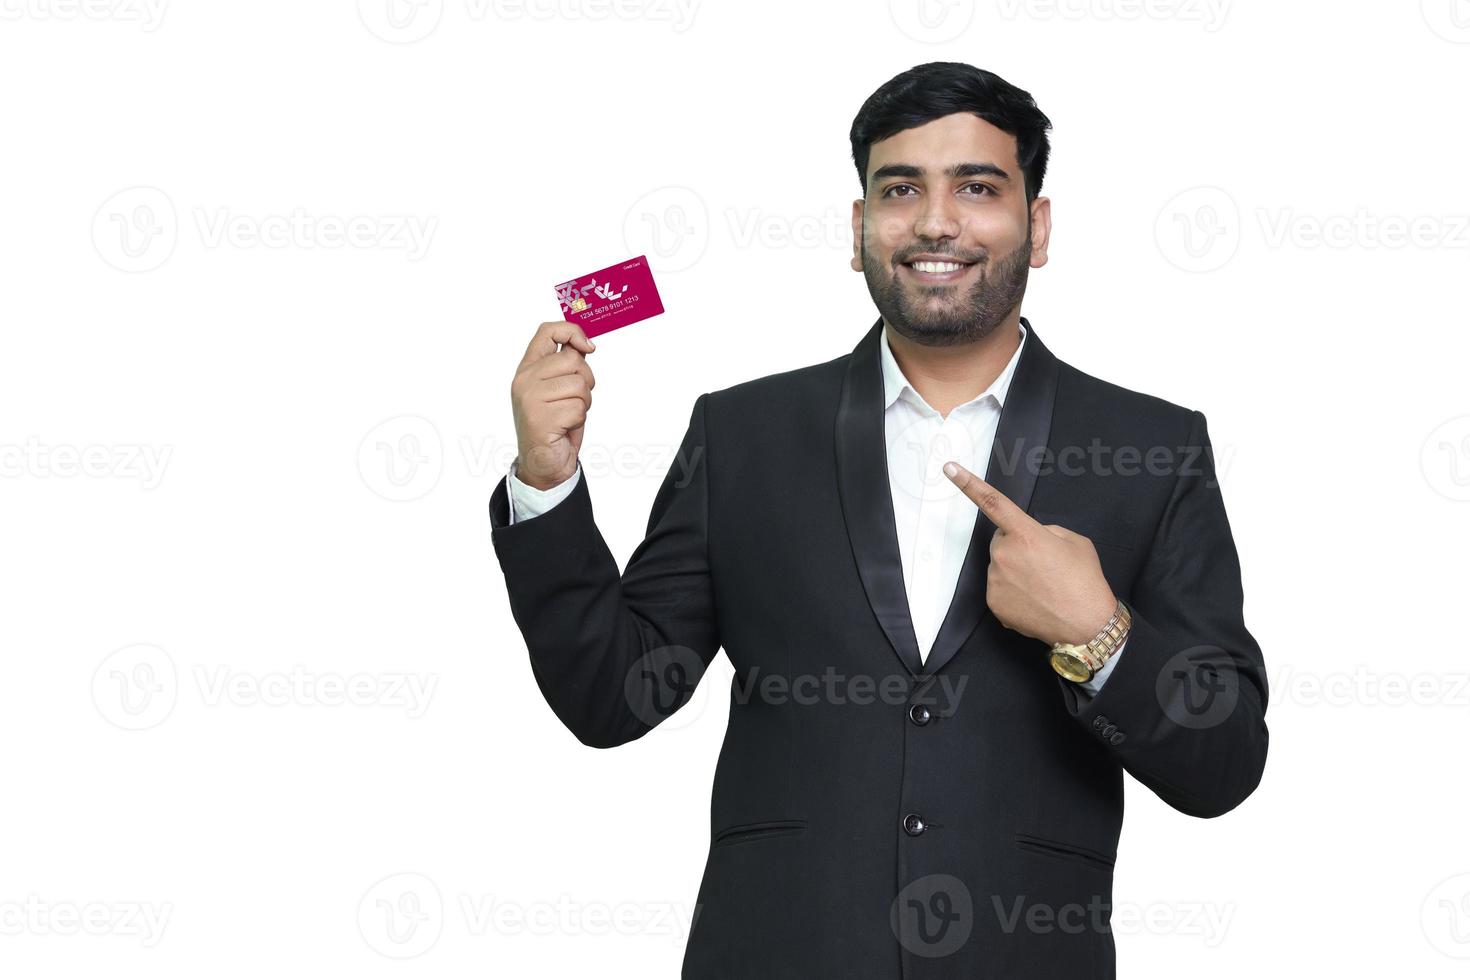 jonge lachende man in wijzend op creditcard. foto